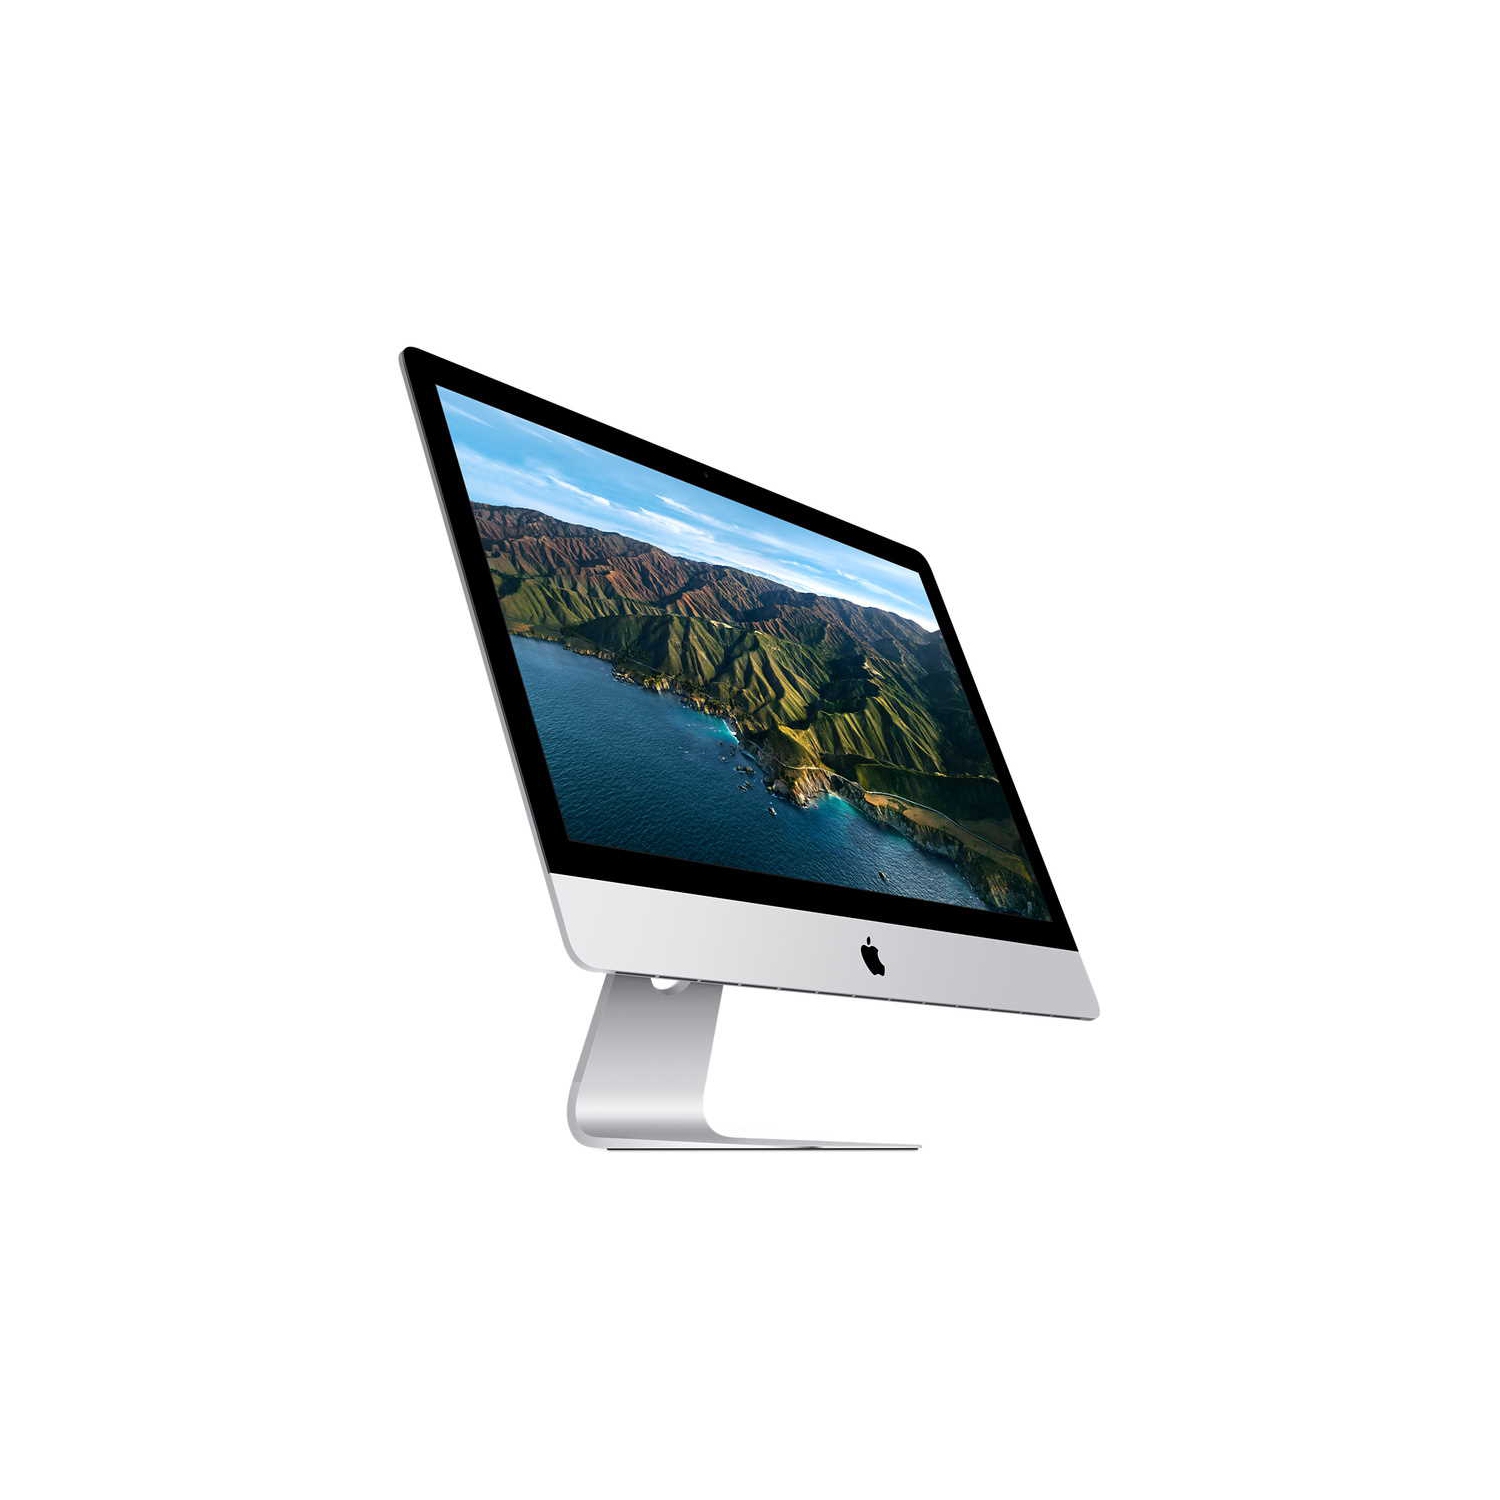 Refurbished - Excellent) iMac 27-inch (Retina 5K) 3.1GHZ 6-Core i5 